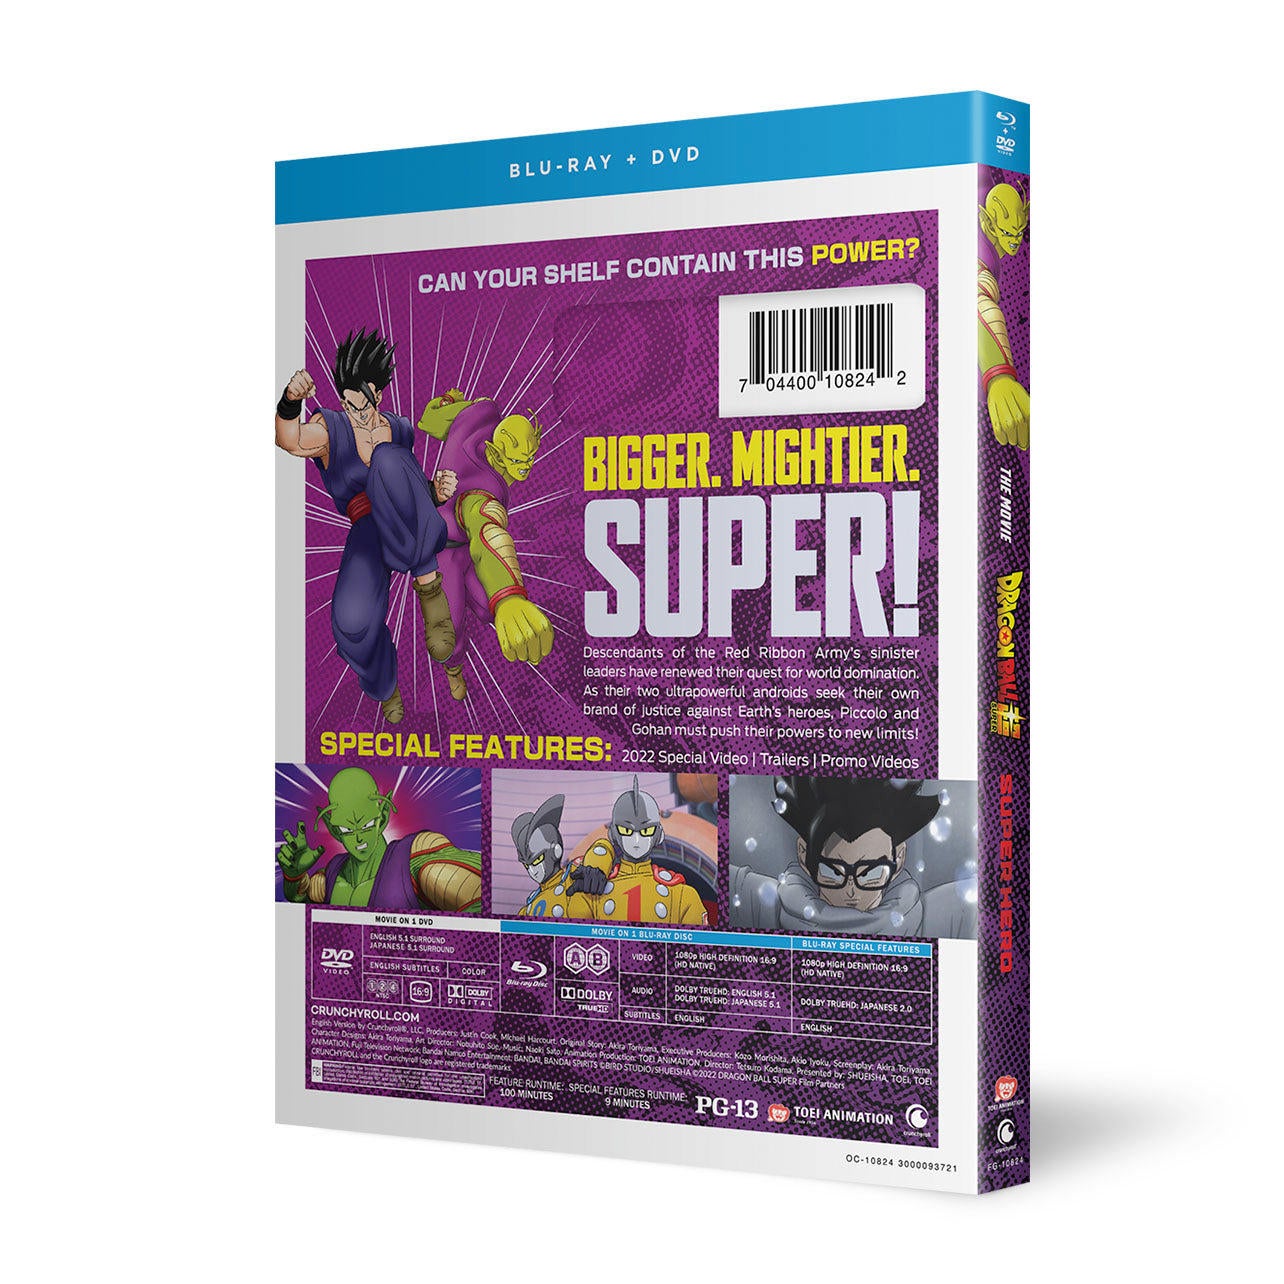  Dragon Ball Super: Super Hero - The Movie - [DVD] : Everything  Else